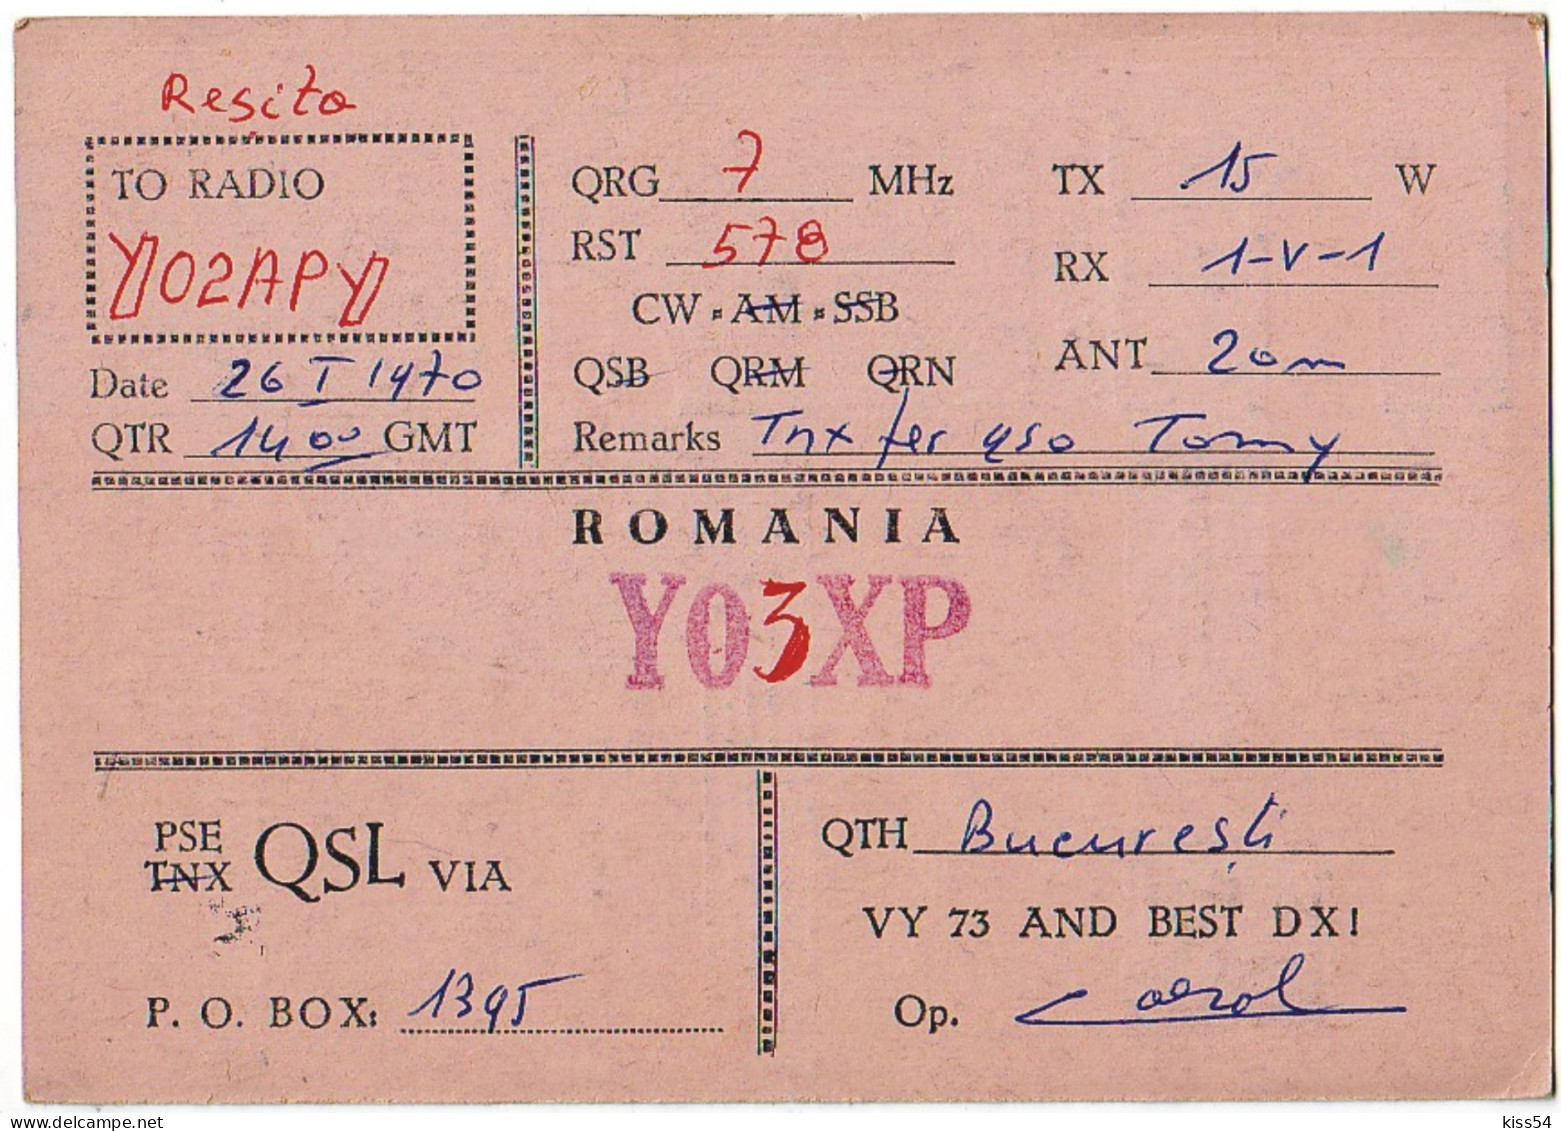 Q 40 - 301-a ROMANIA - 1970 - Radio-amateur